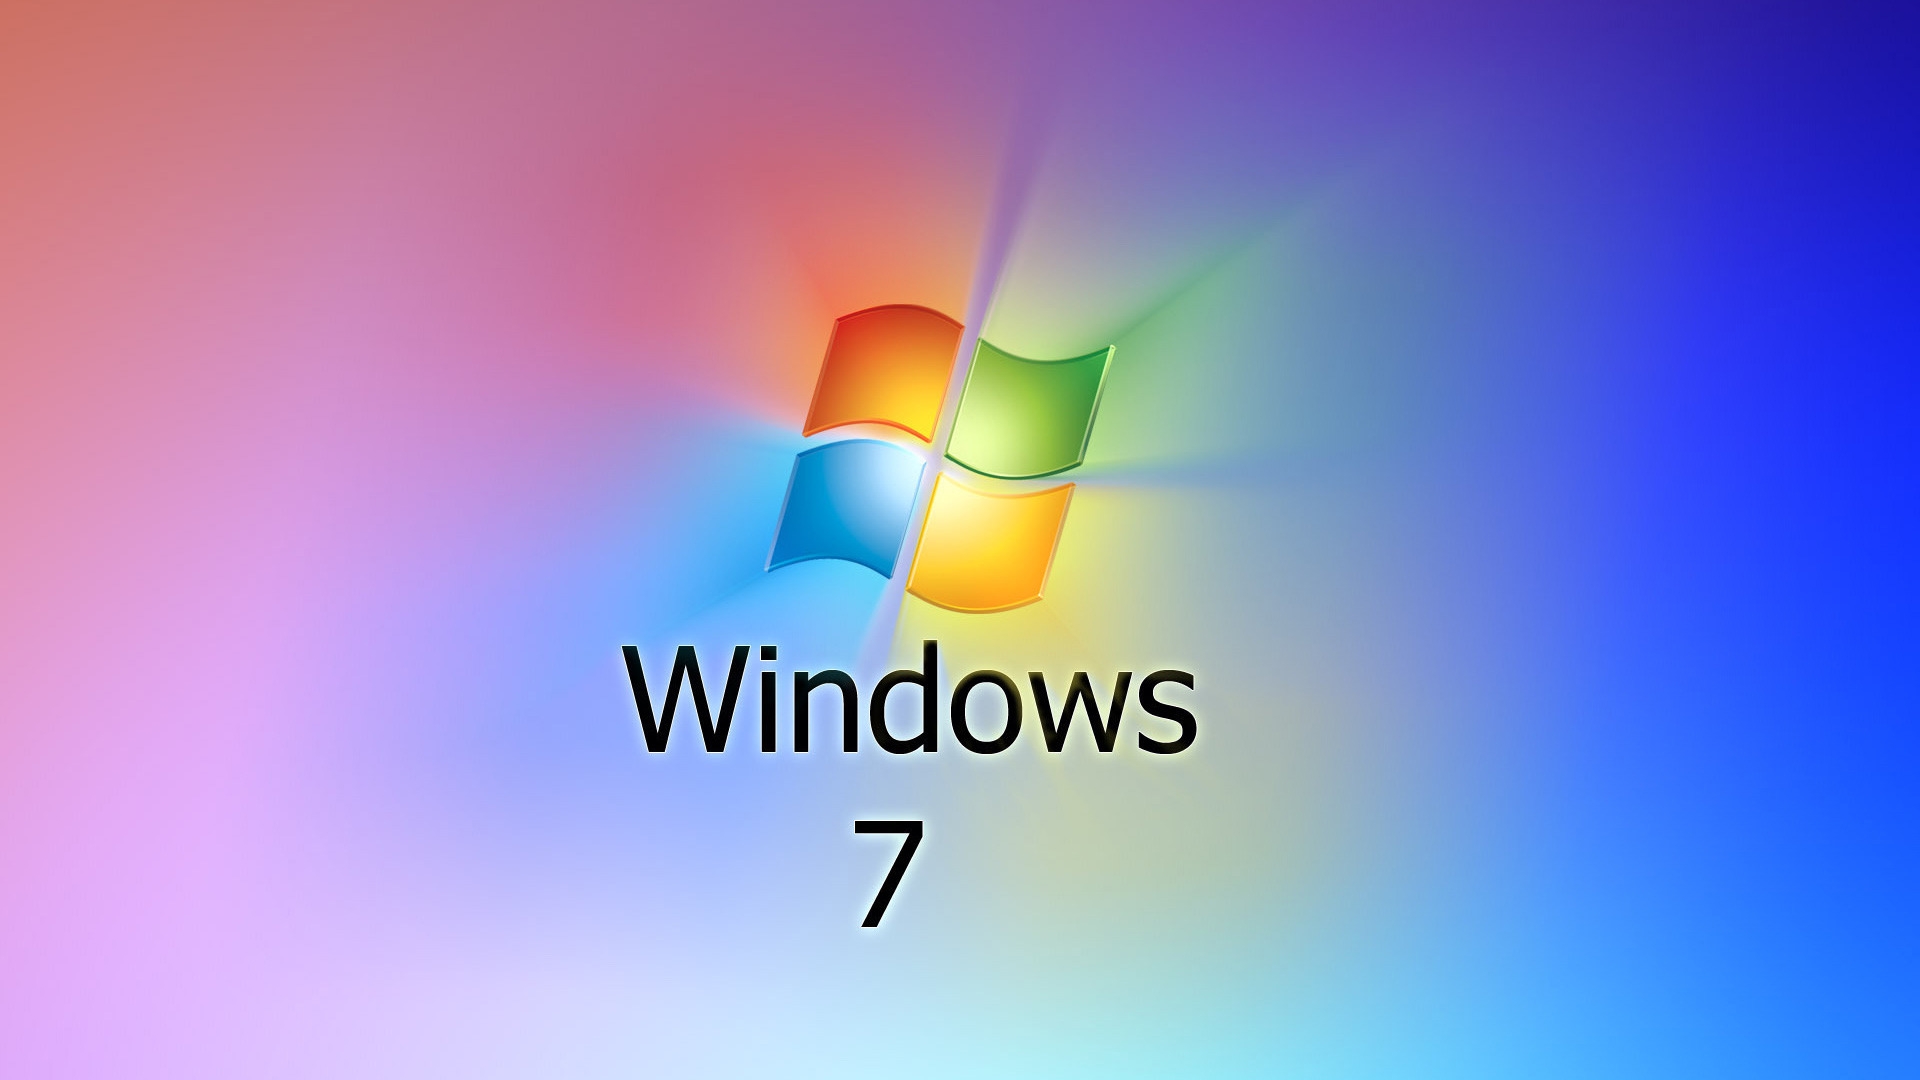 Windows 7 Simple for 1920 x 1080 HDTV 1080p resolution